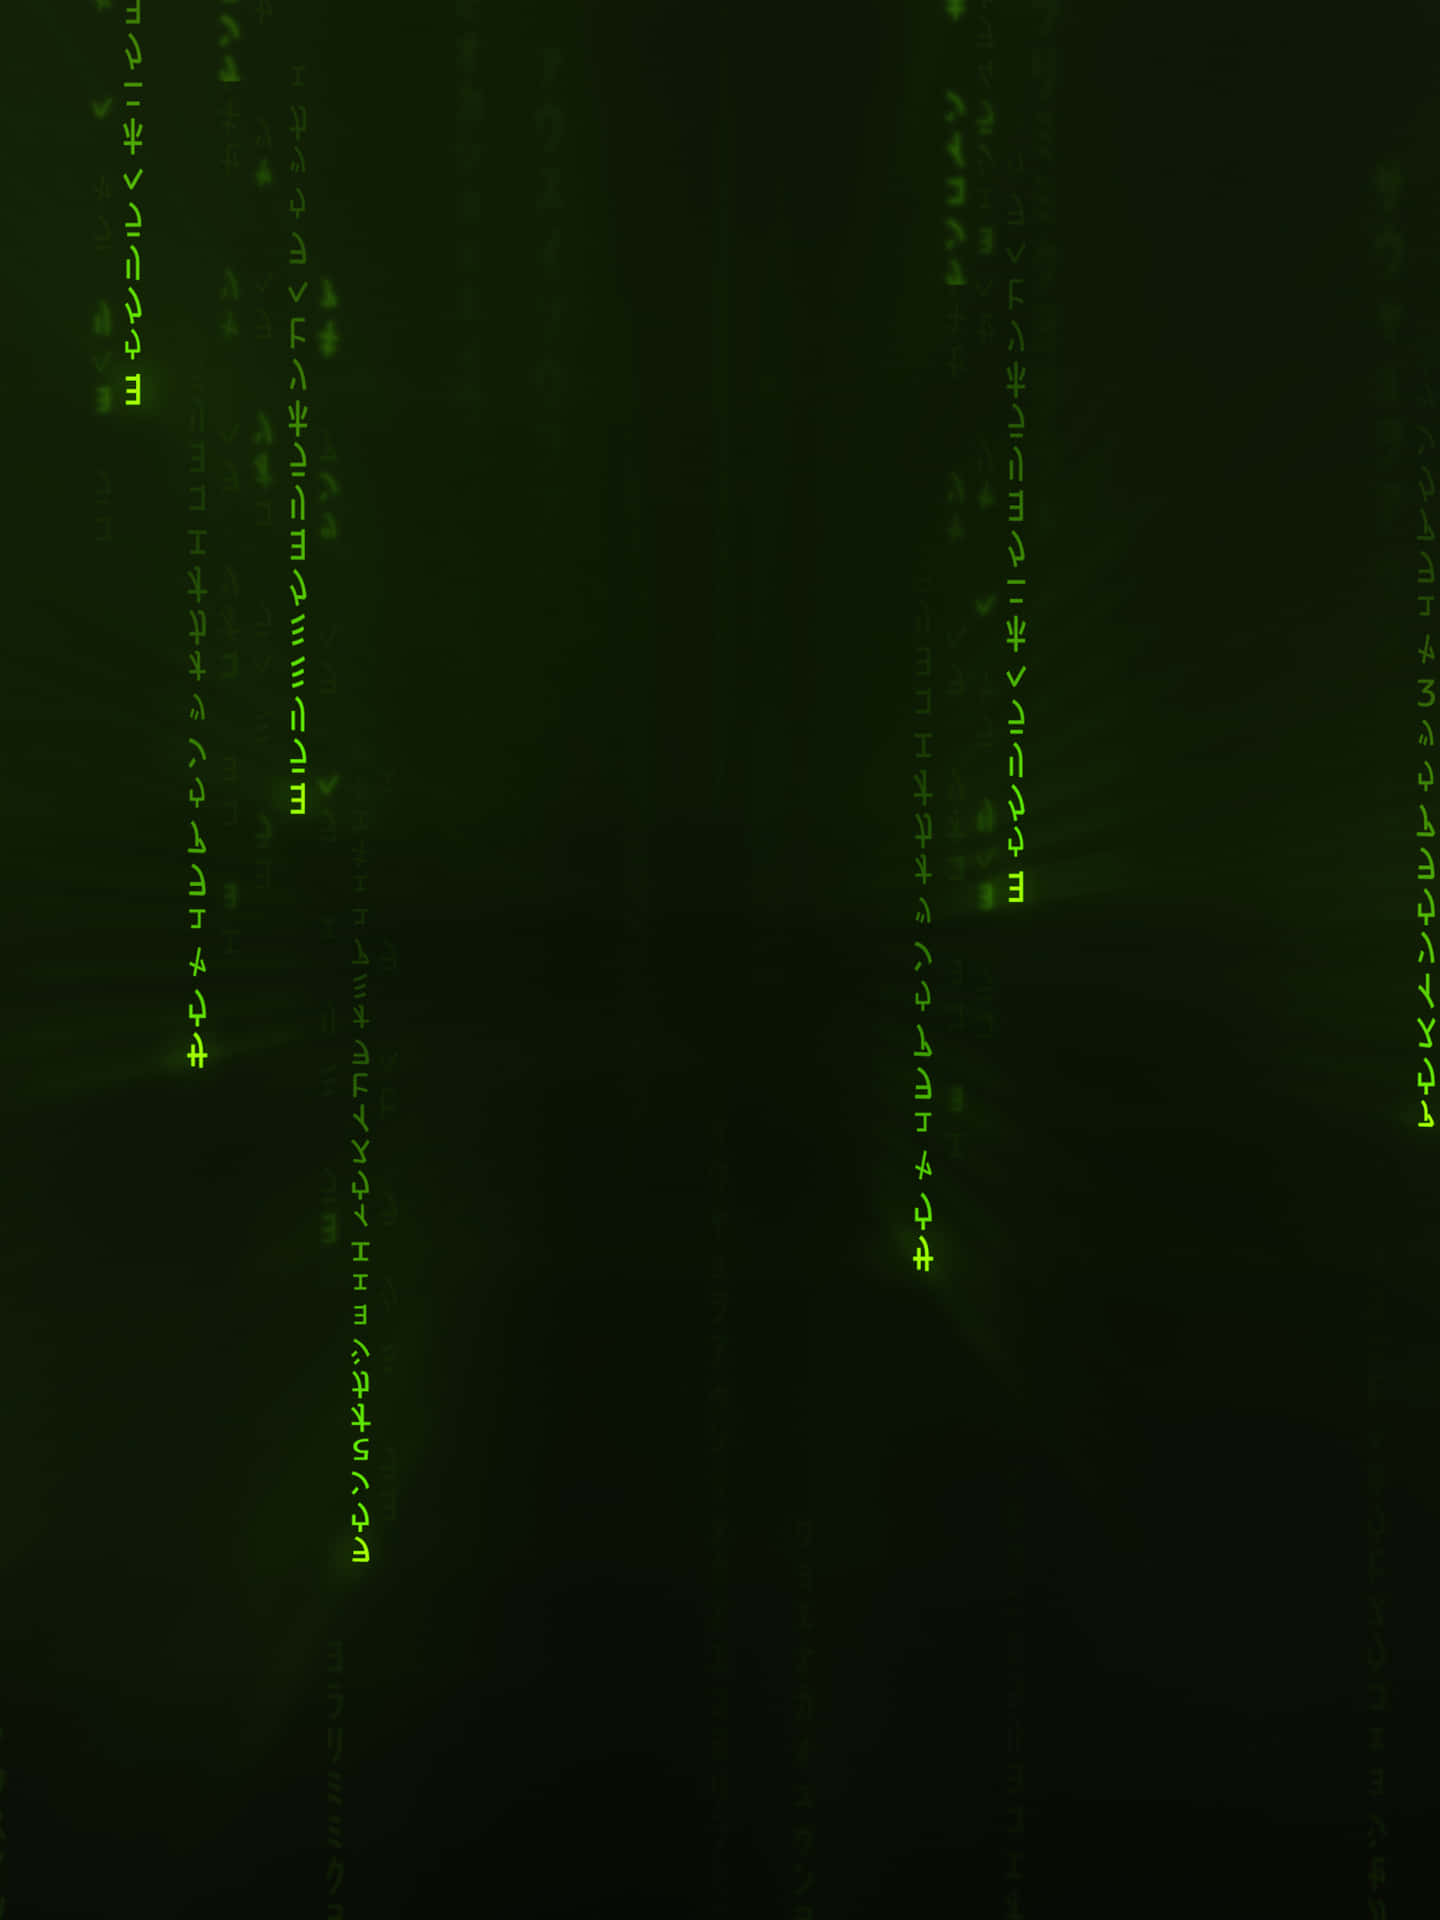 "Enter the Matrix" Wallpaper